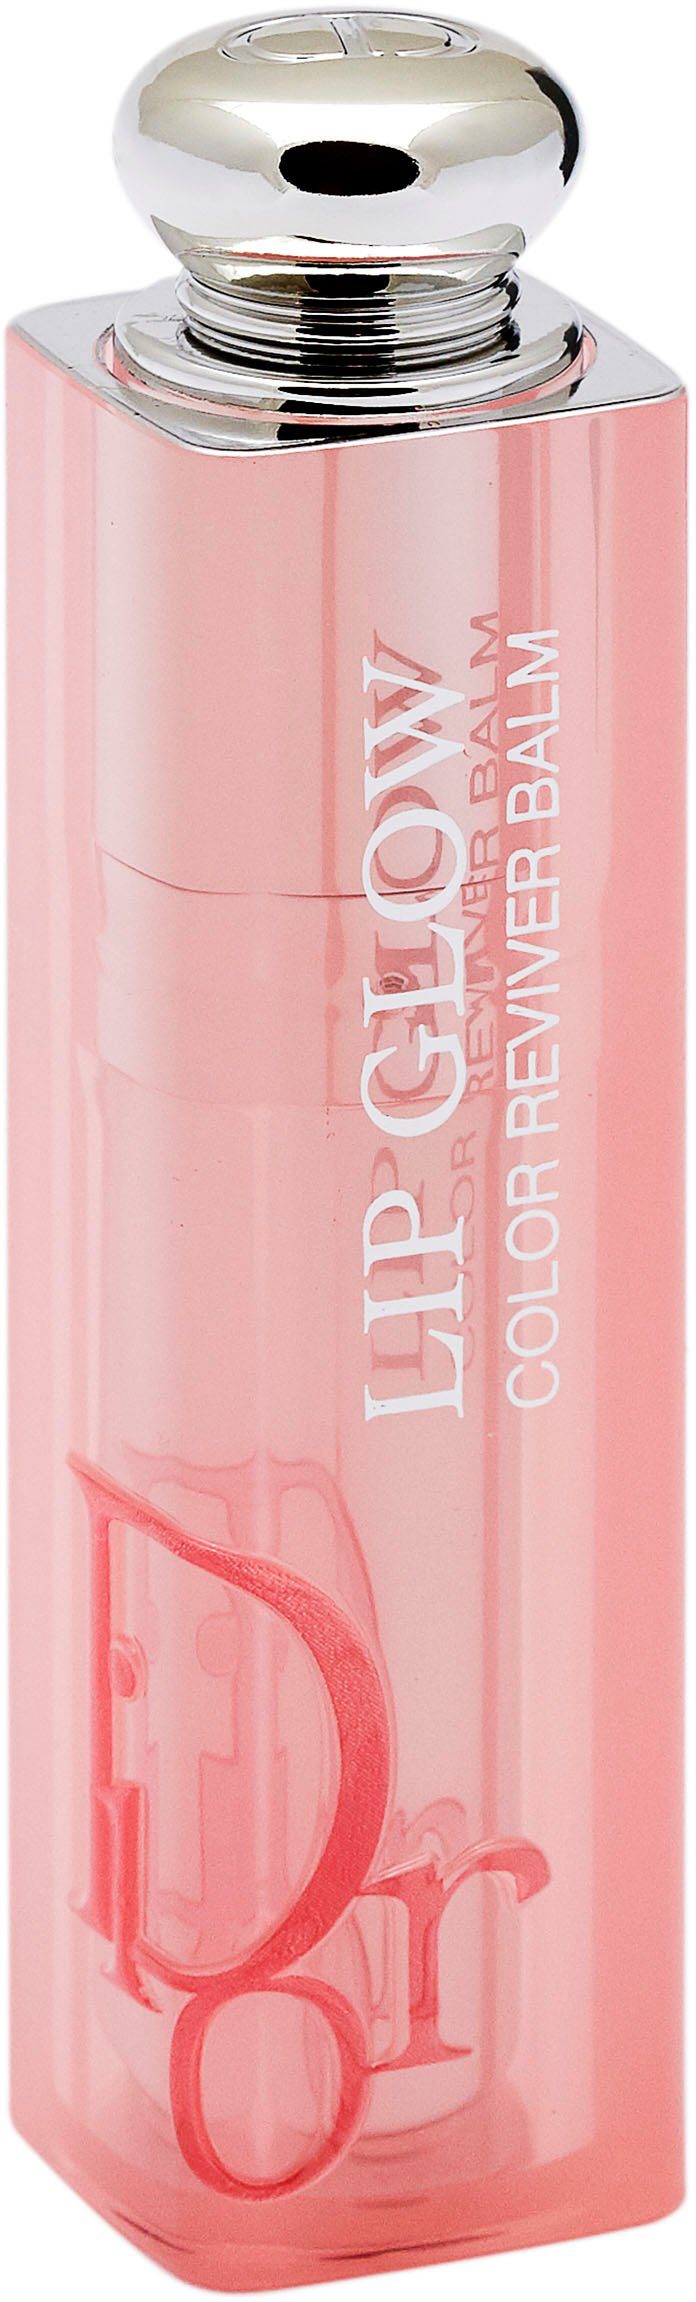 Glow Lippenbalsam Lip 012 Addict Dior Rosewood Dior